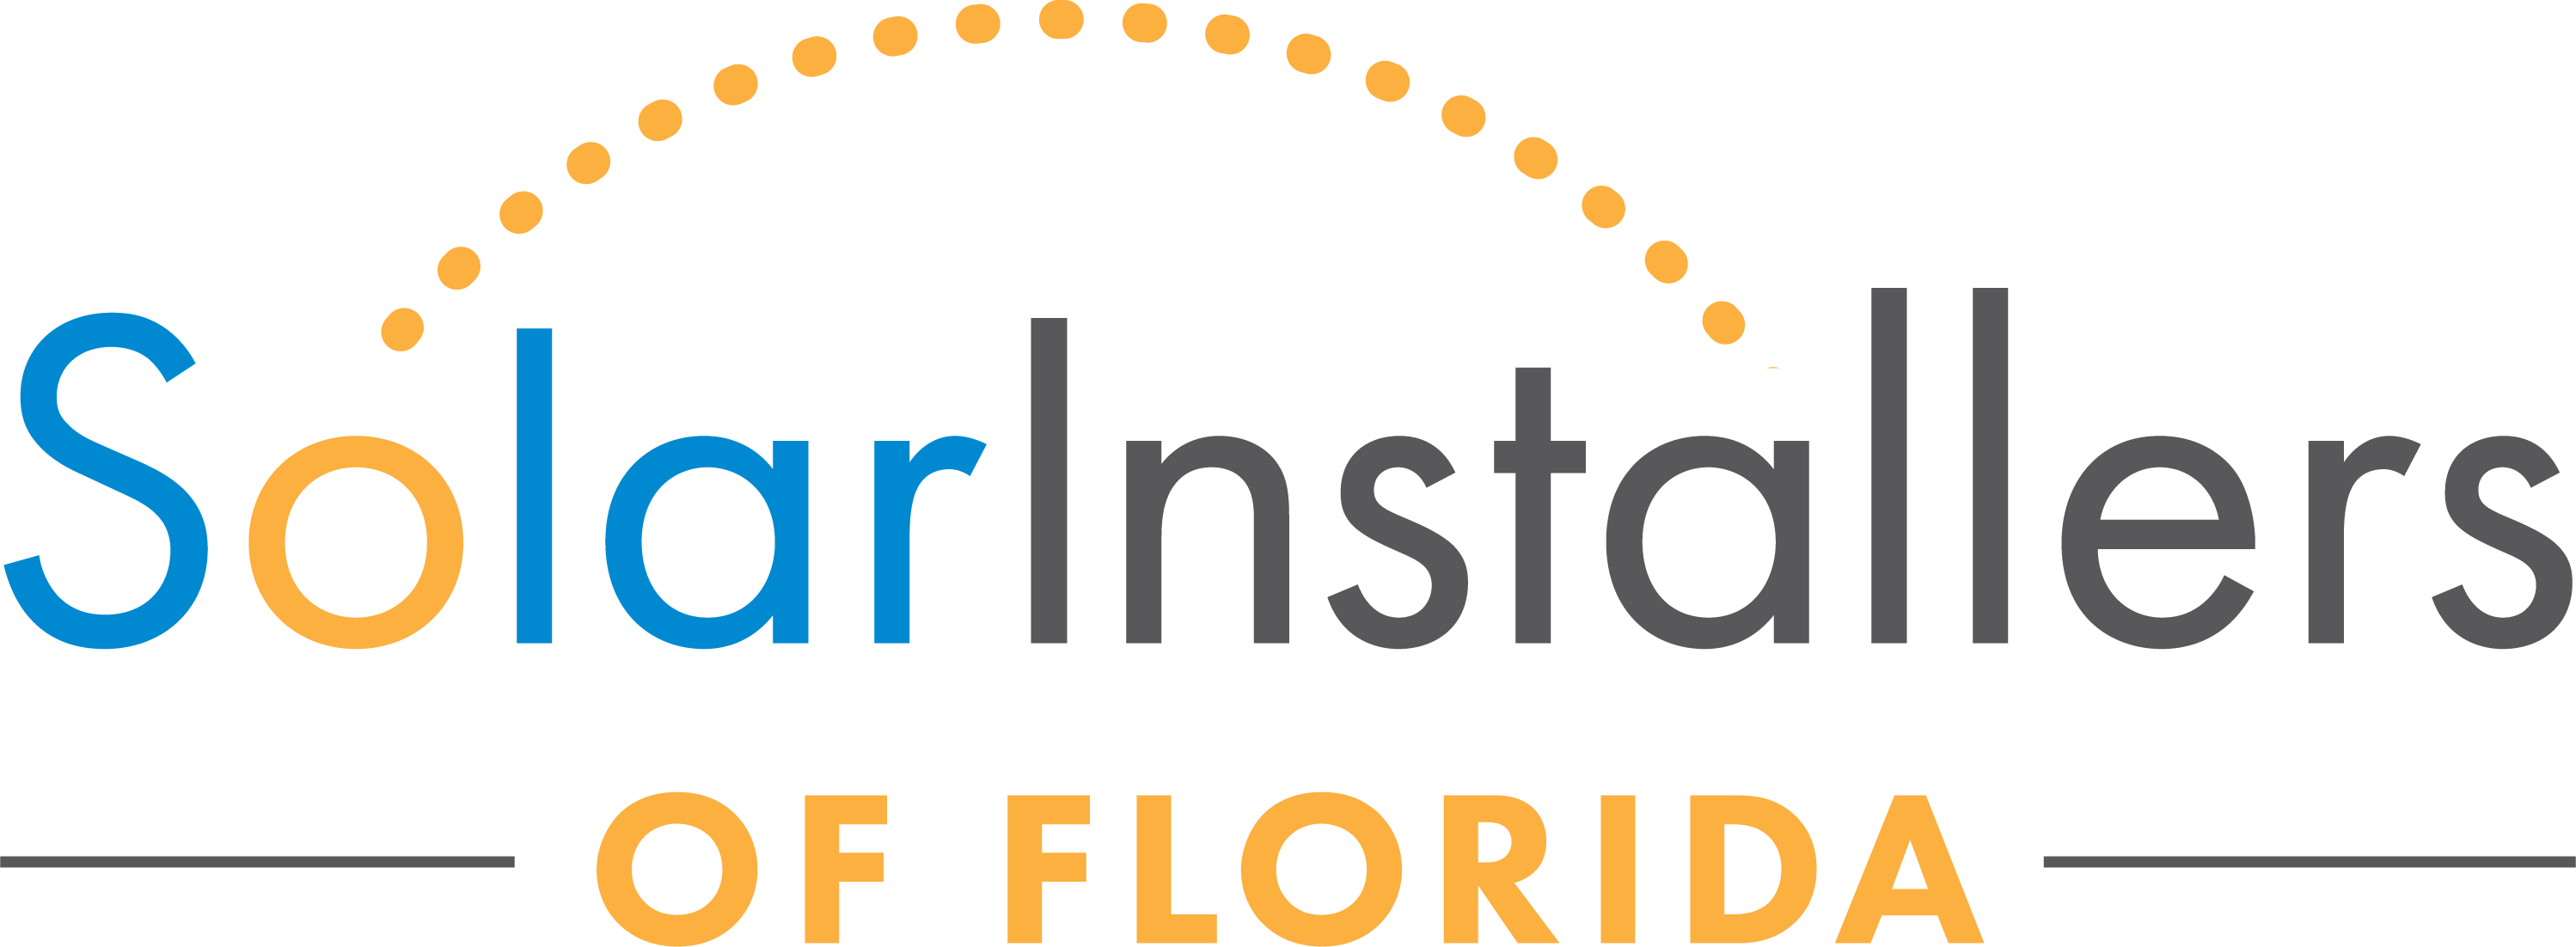 Solar Installers of Florida - Espanol